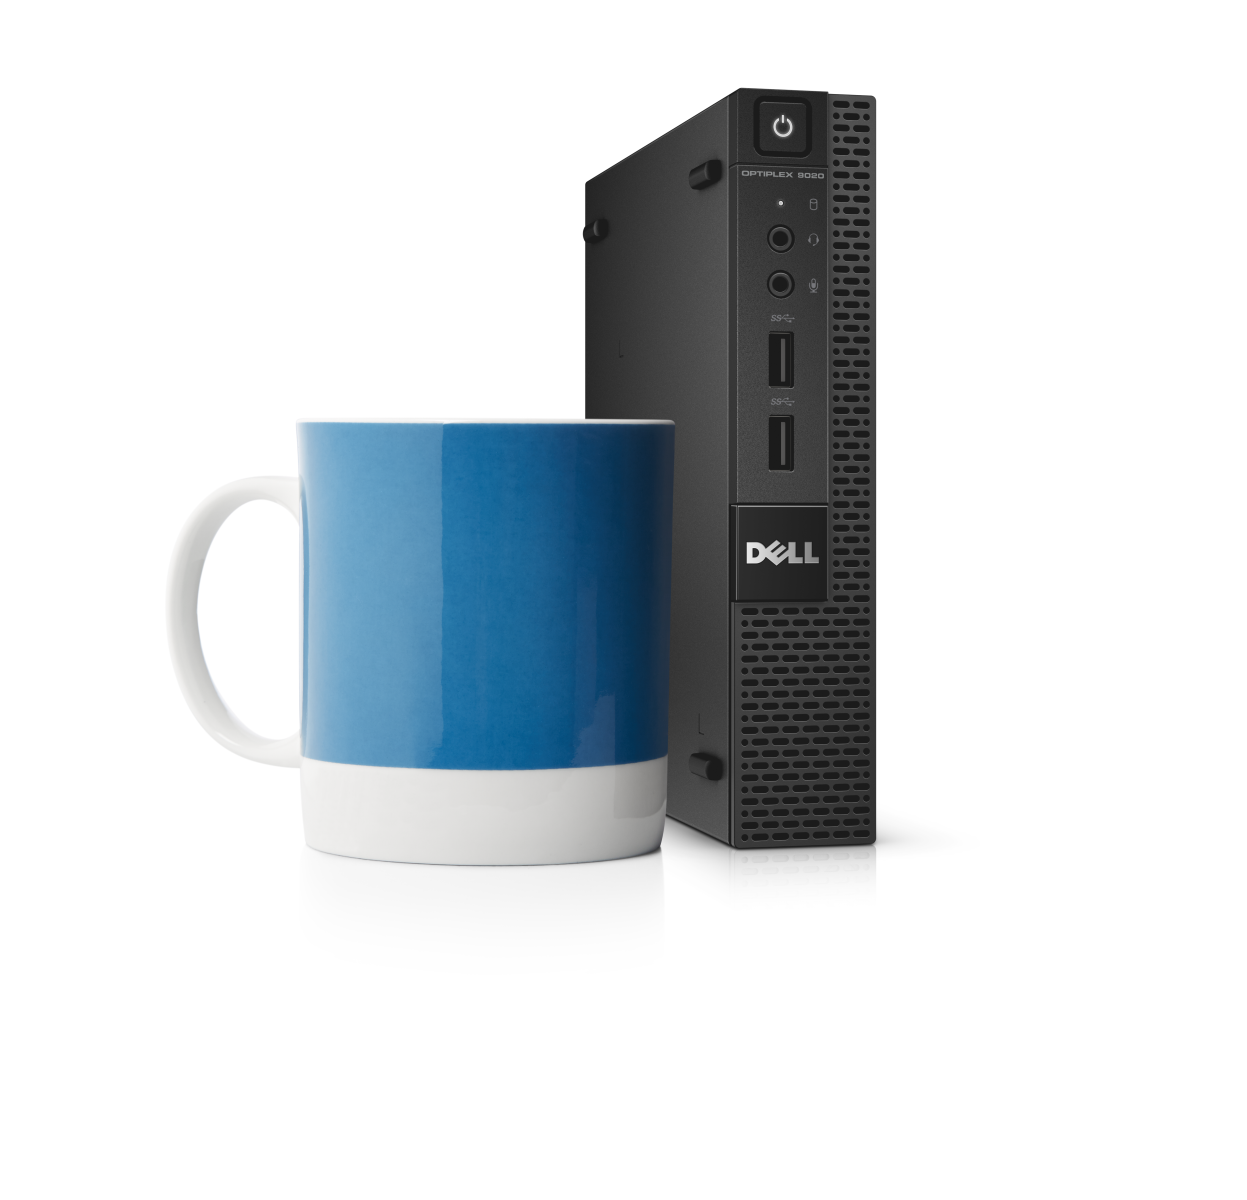 Nowe komputery Dell dla biznesu